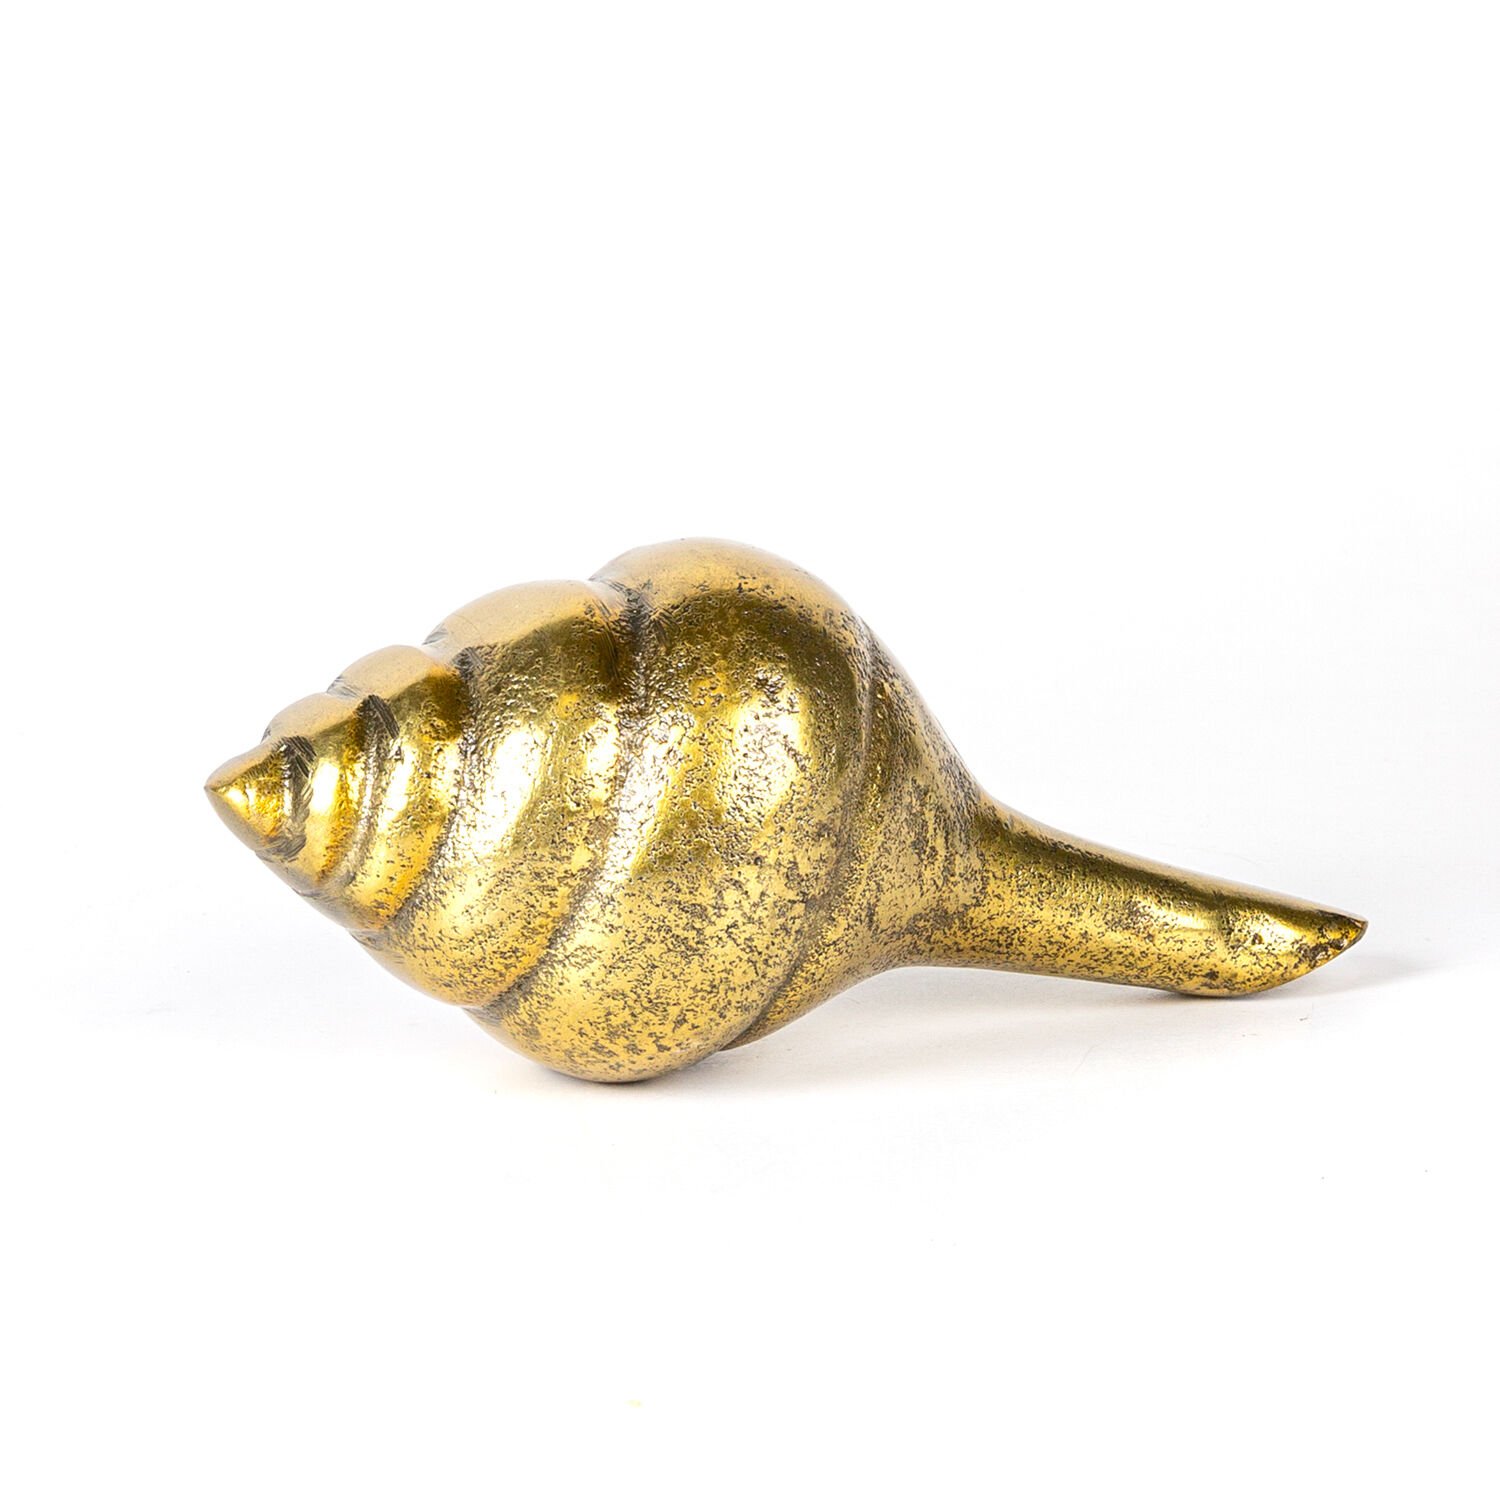 Dekoratif Metal Deniz Kabuğu Gold 14x6x6 Cm.